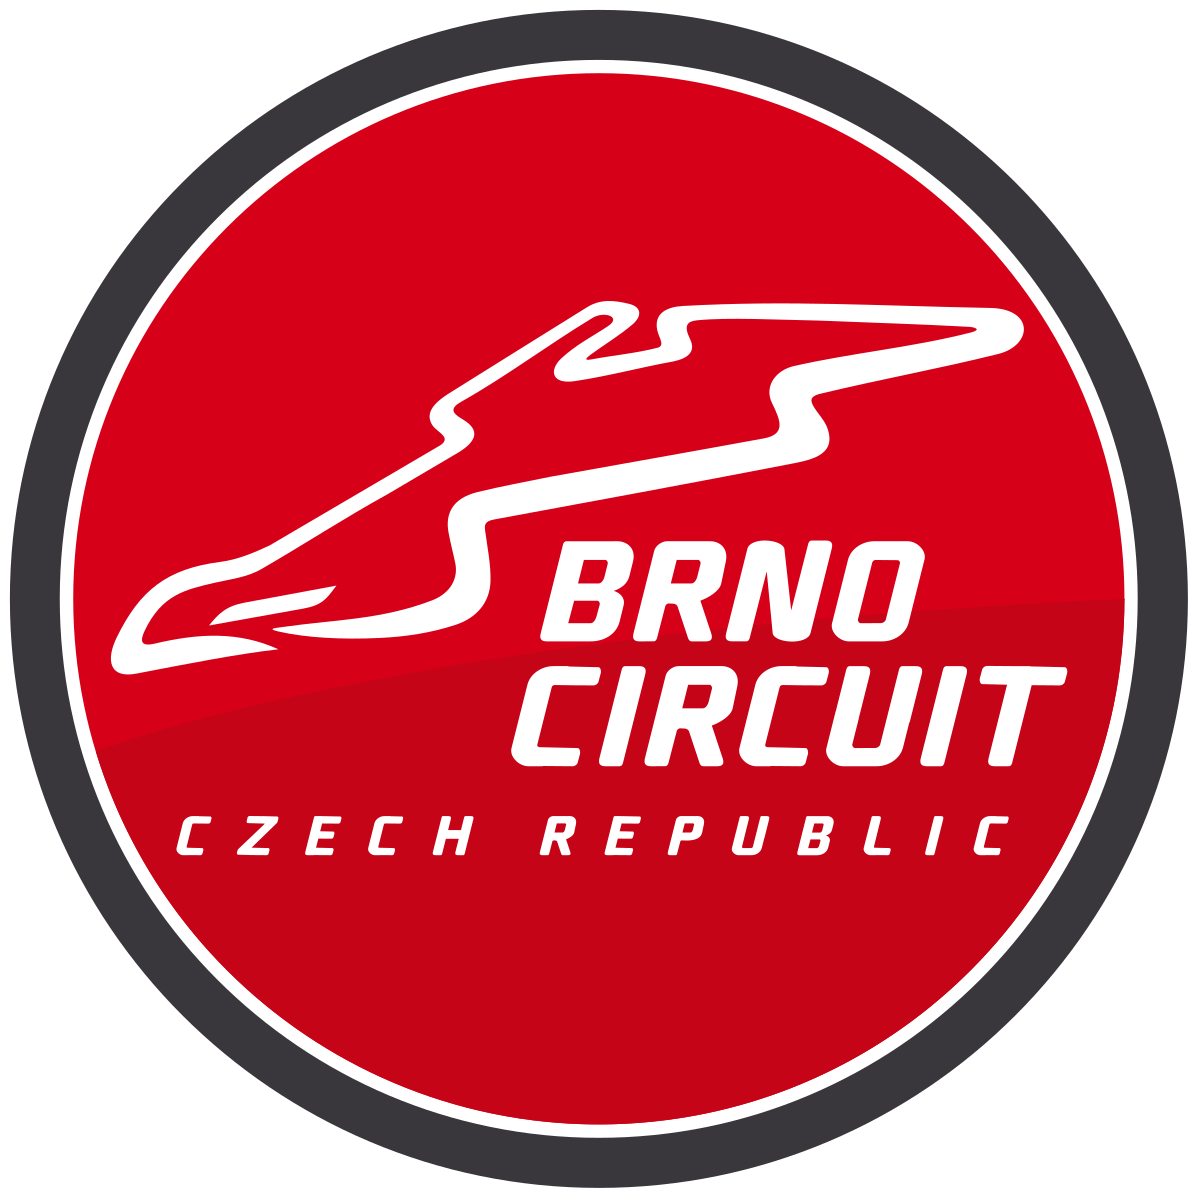 Brno Logo - Brno Circuit